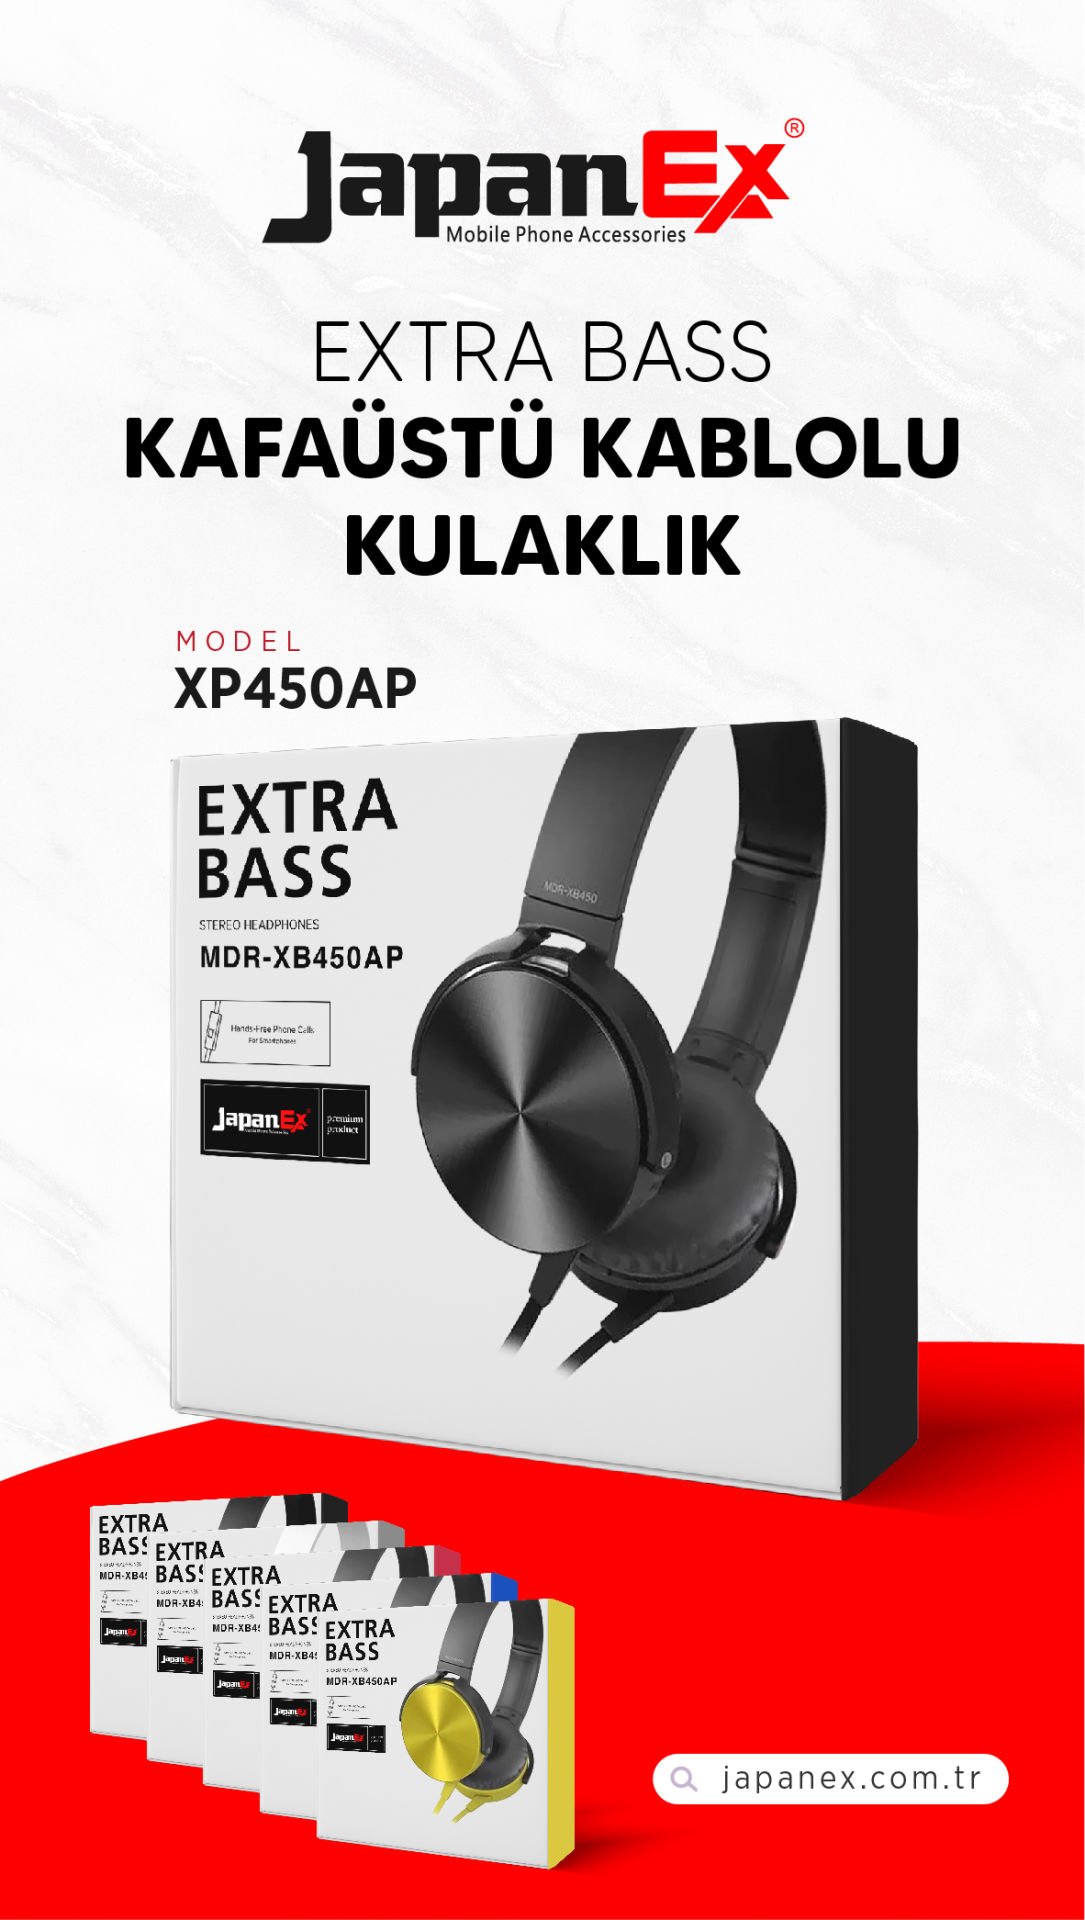 JAPANEX EXTRABAS KABLOLU KULAKLIK XP450AP